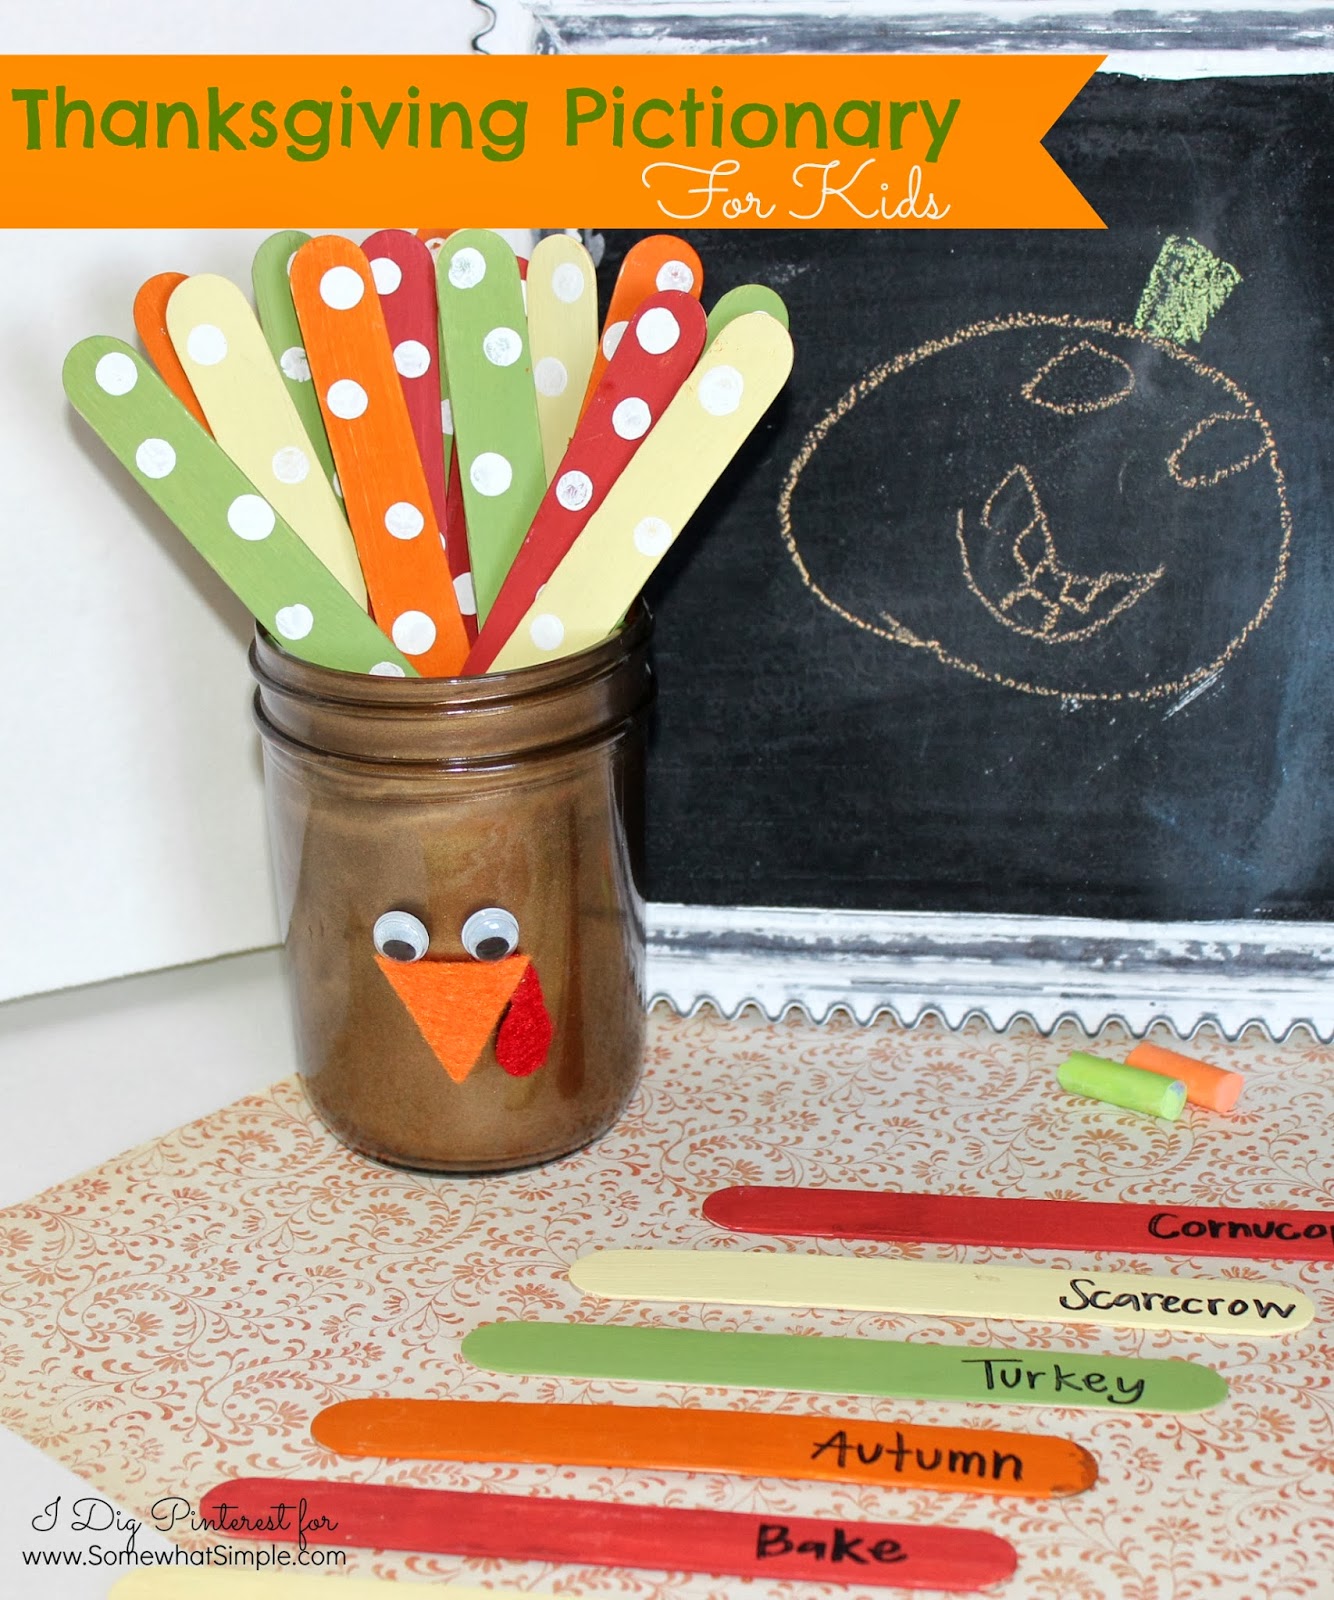 Thanksgiving Pictionary Game For Kids - I Dig Pinterest